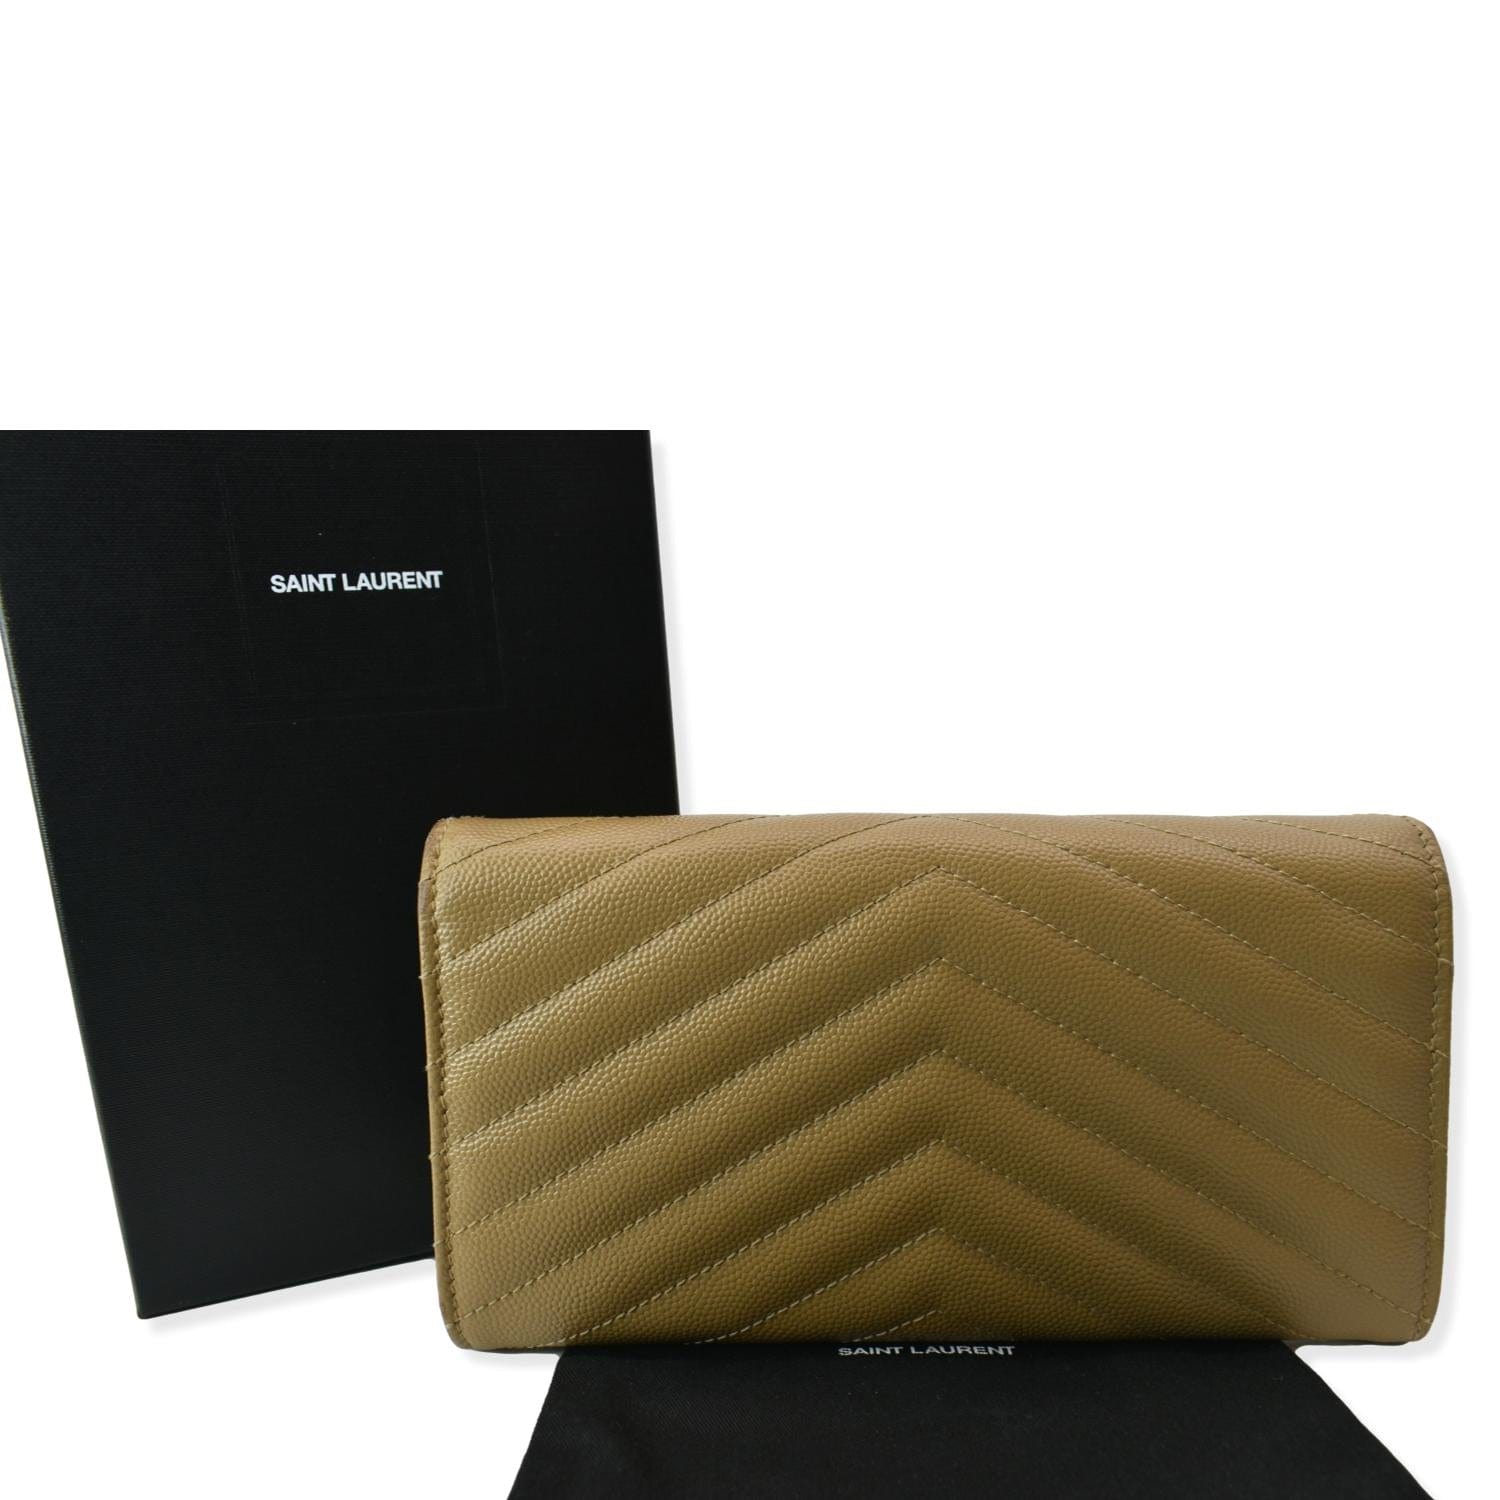 YVES SAINT LAURENT Monogram Grain Leather Card Case Beige